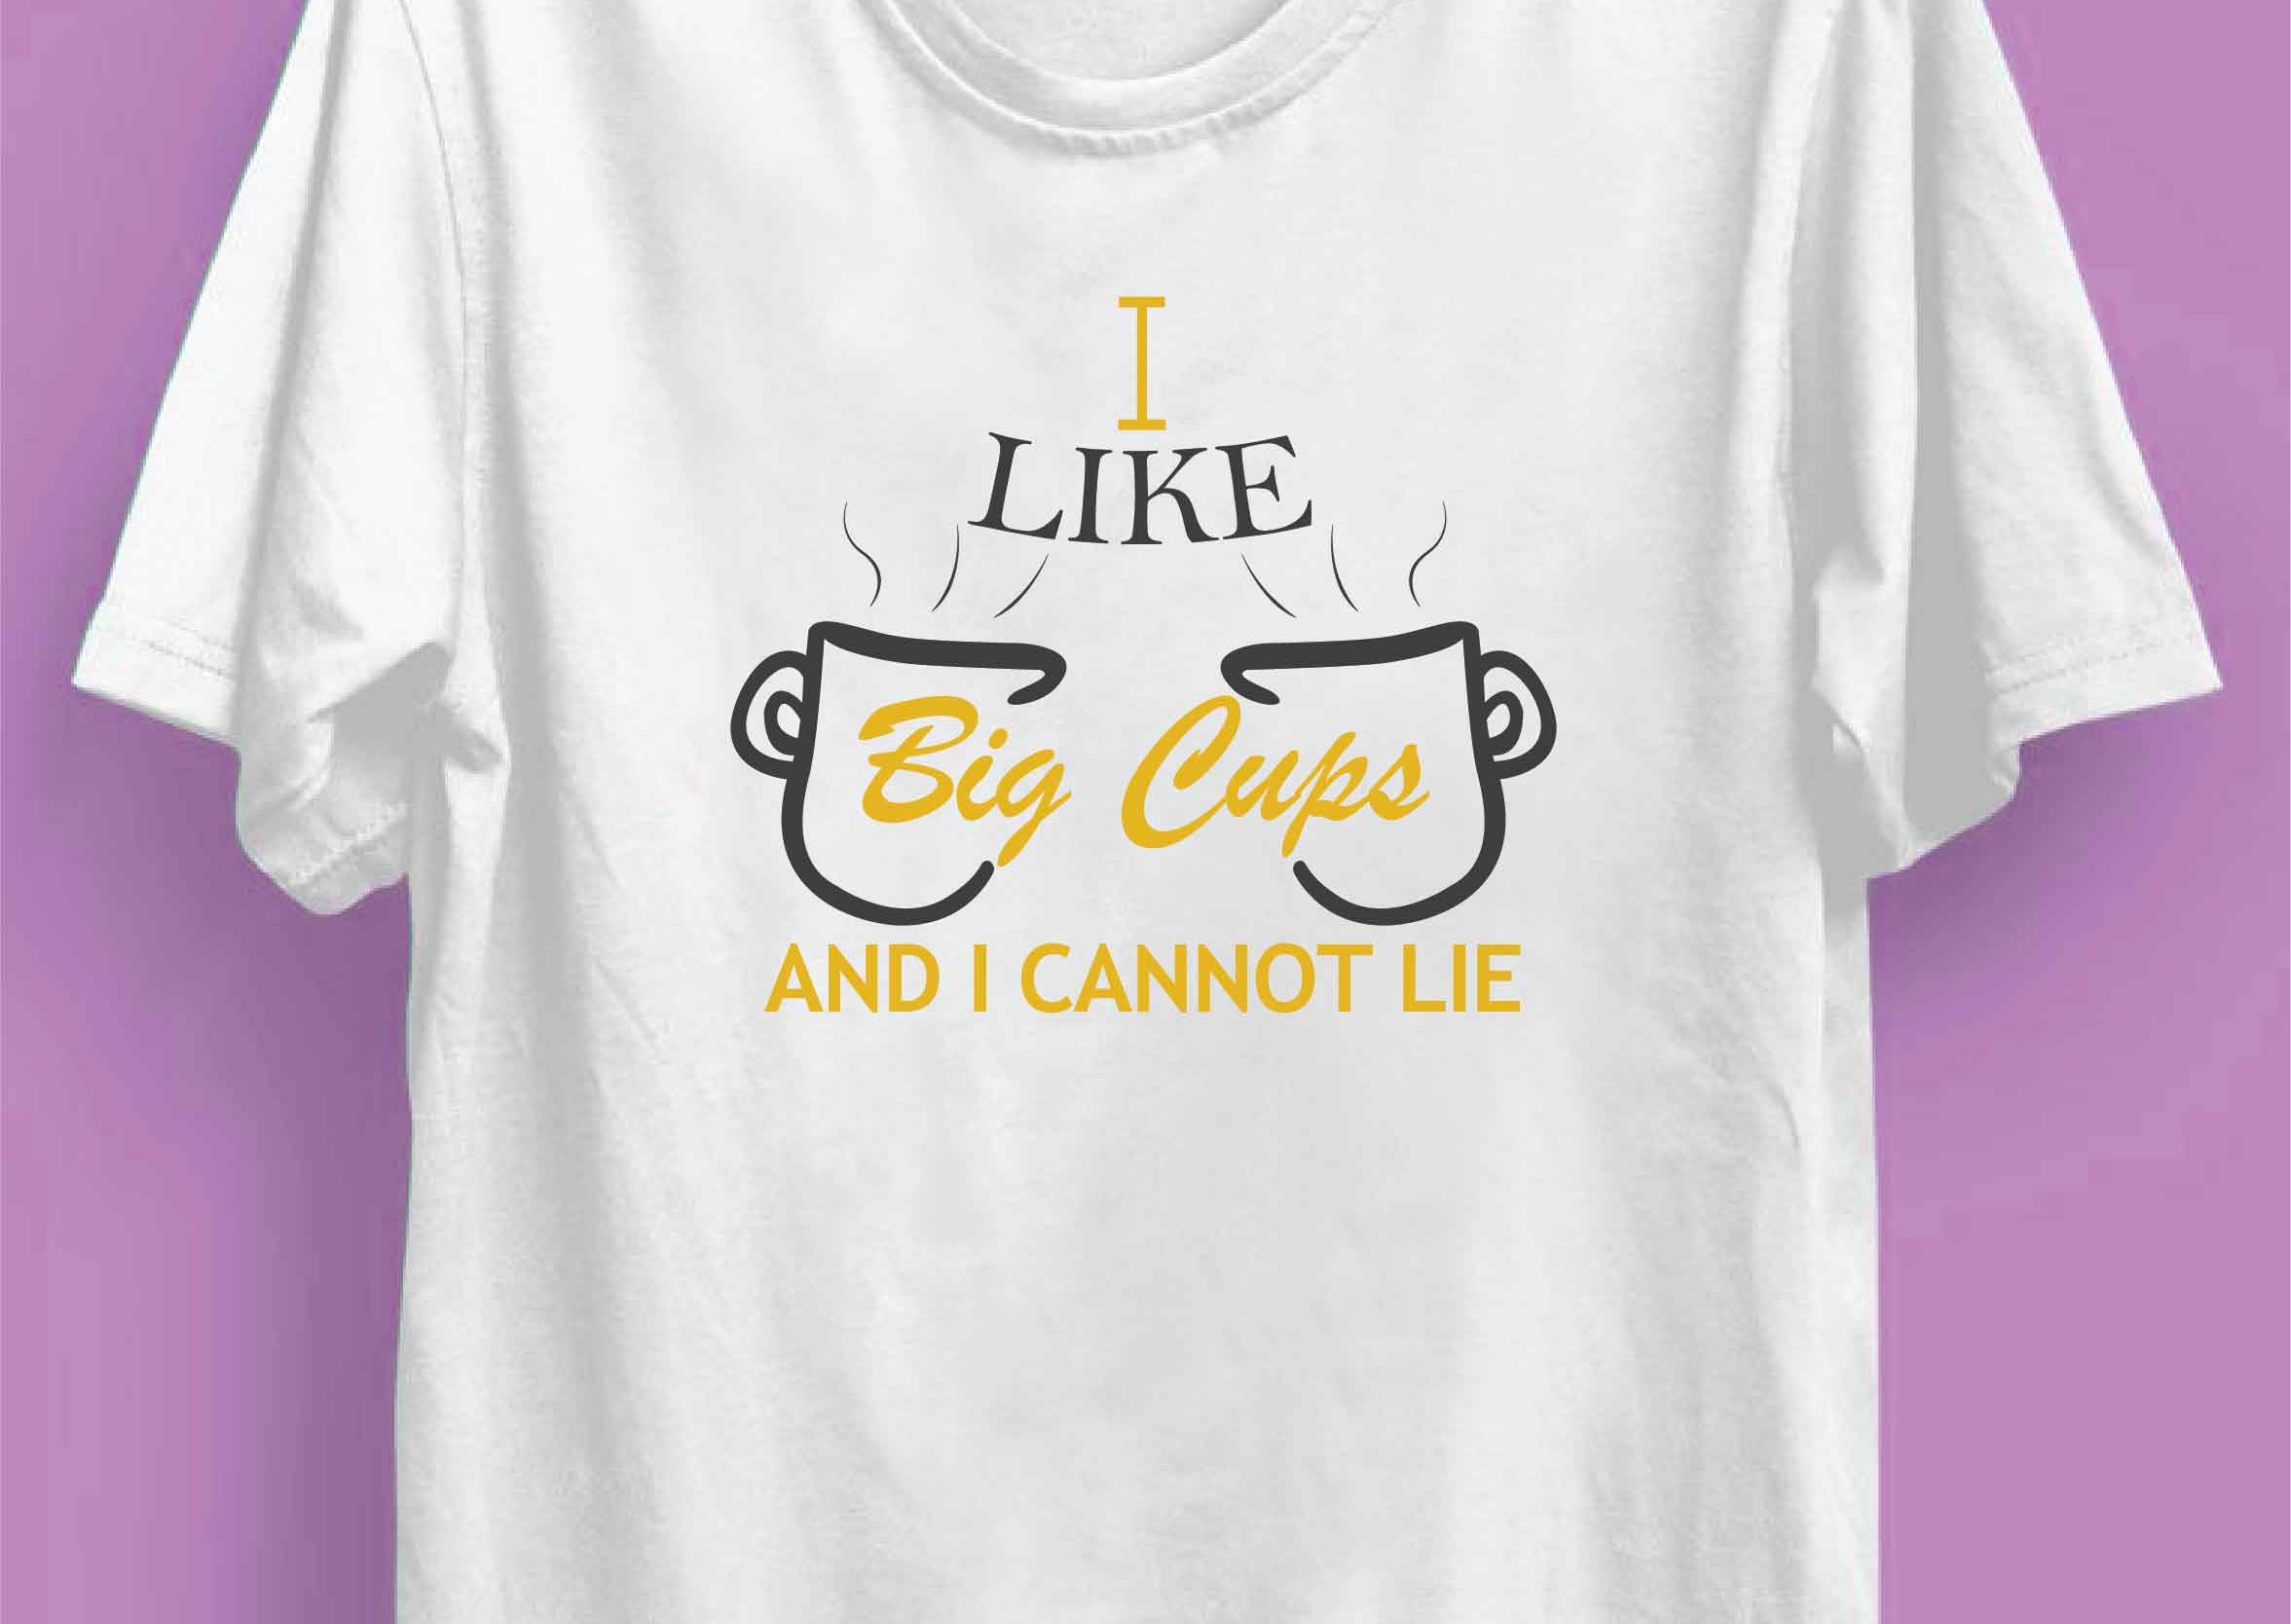 I like Big Cups Reactr Tshirts For Men - Eyewearlabs